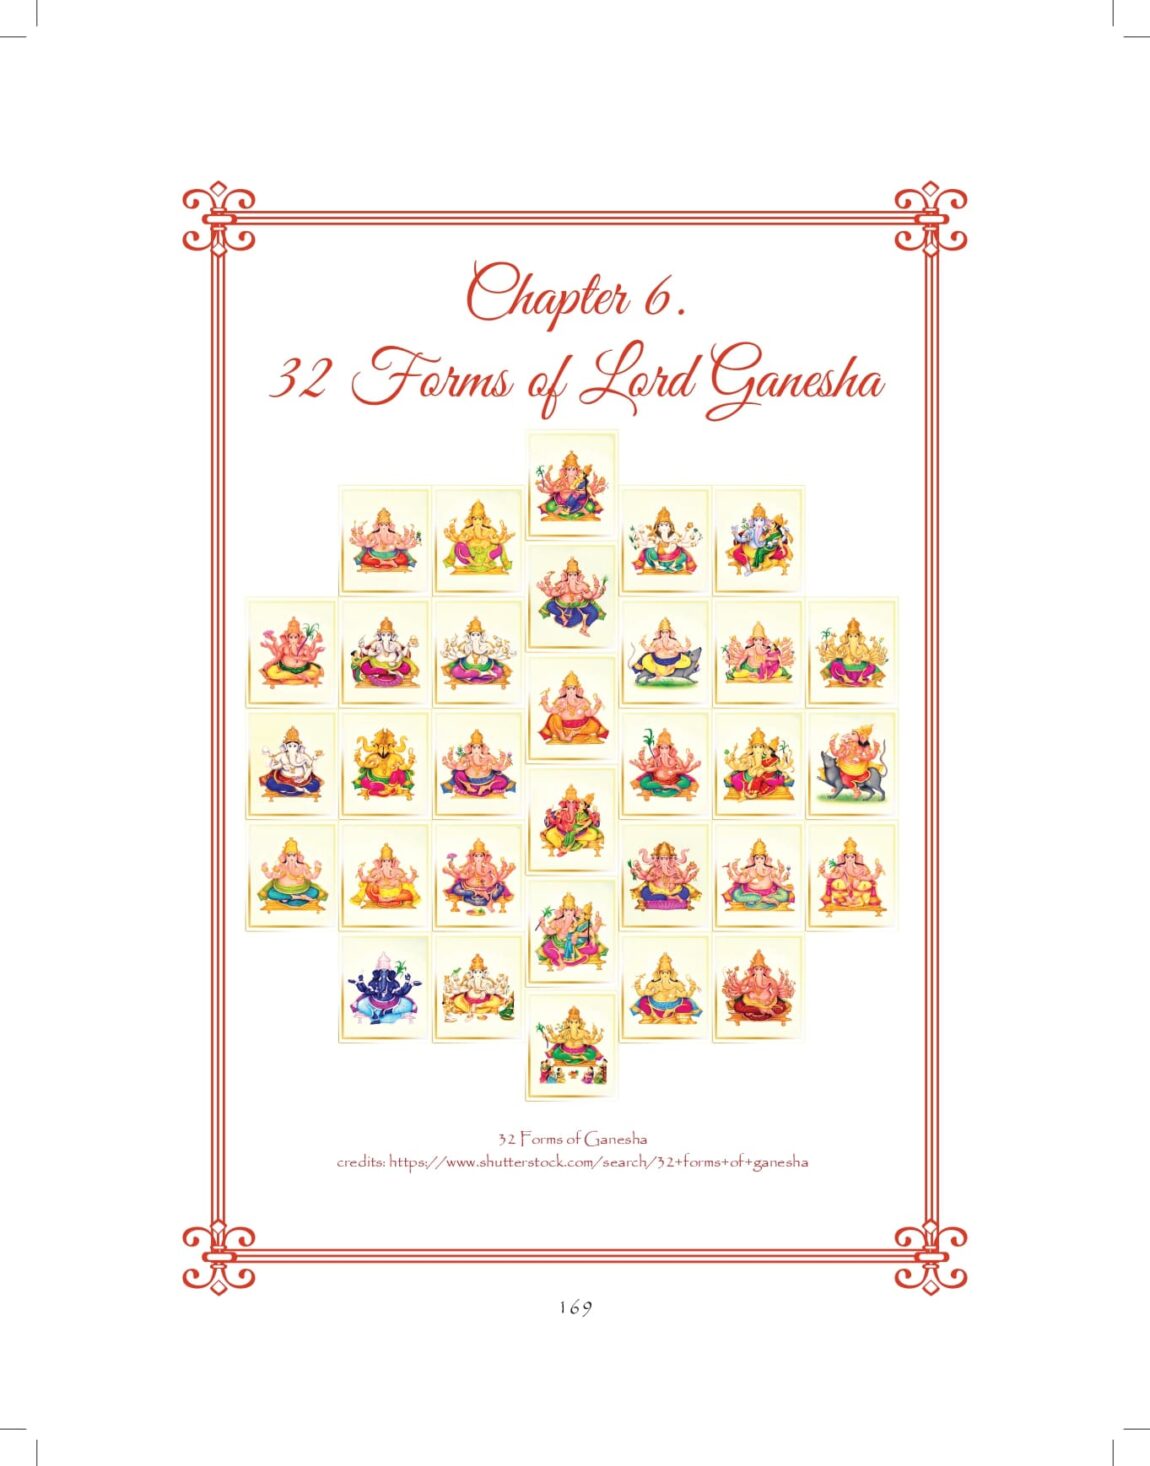 Ganesh-print_pages-to-jpg-0169.jpg